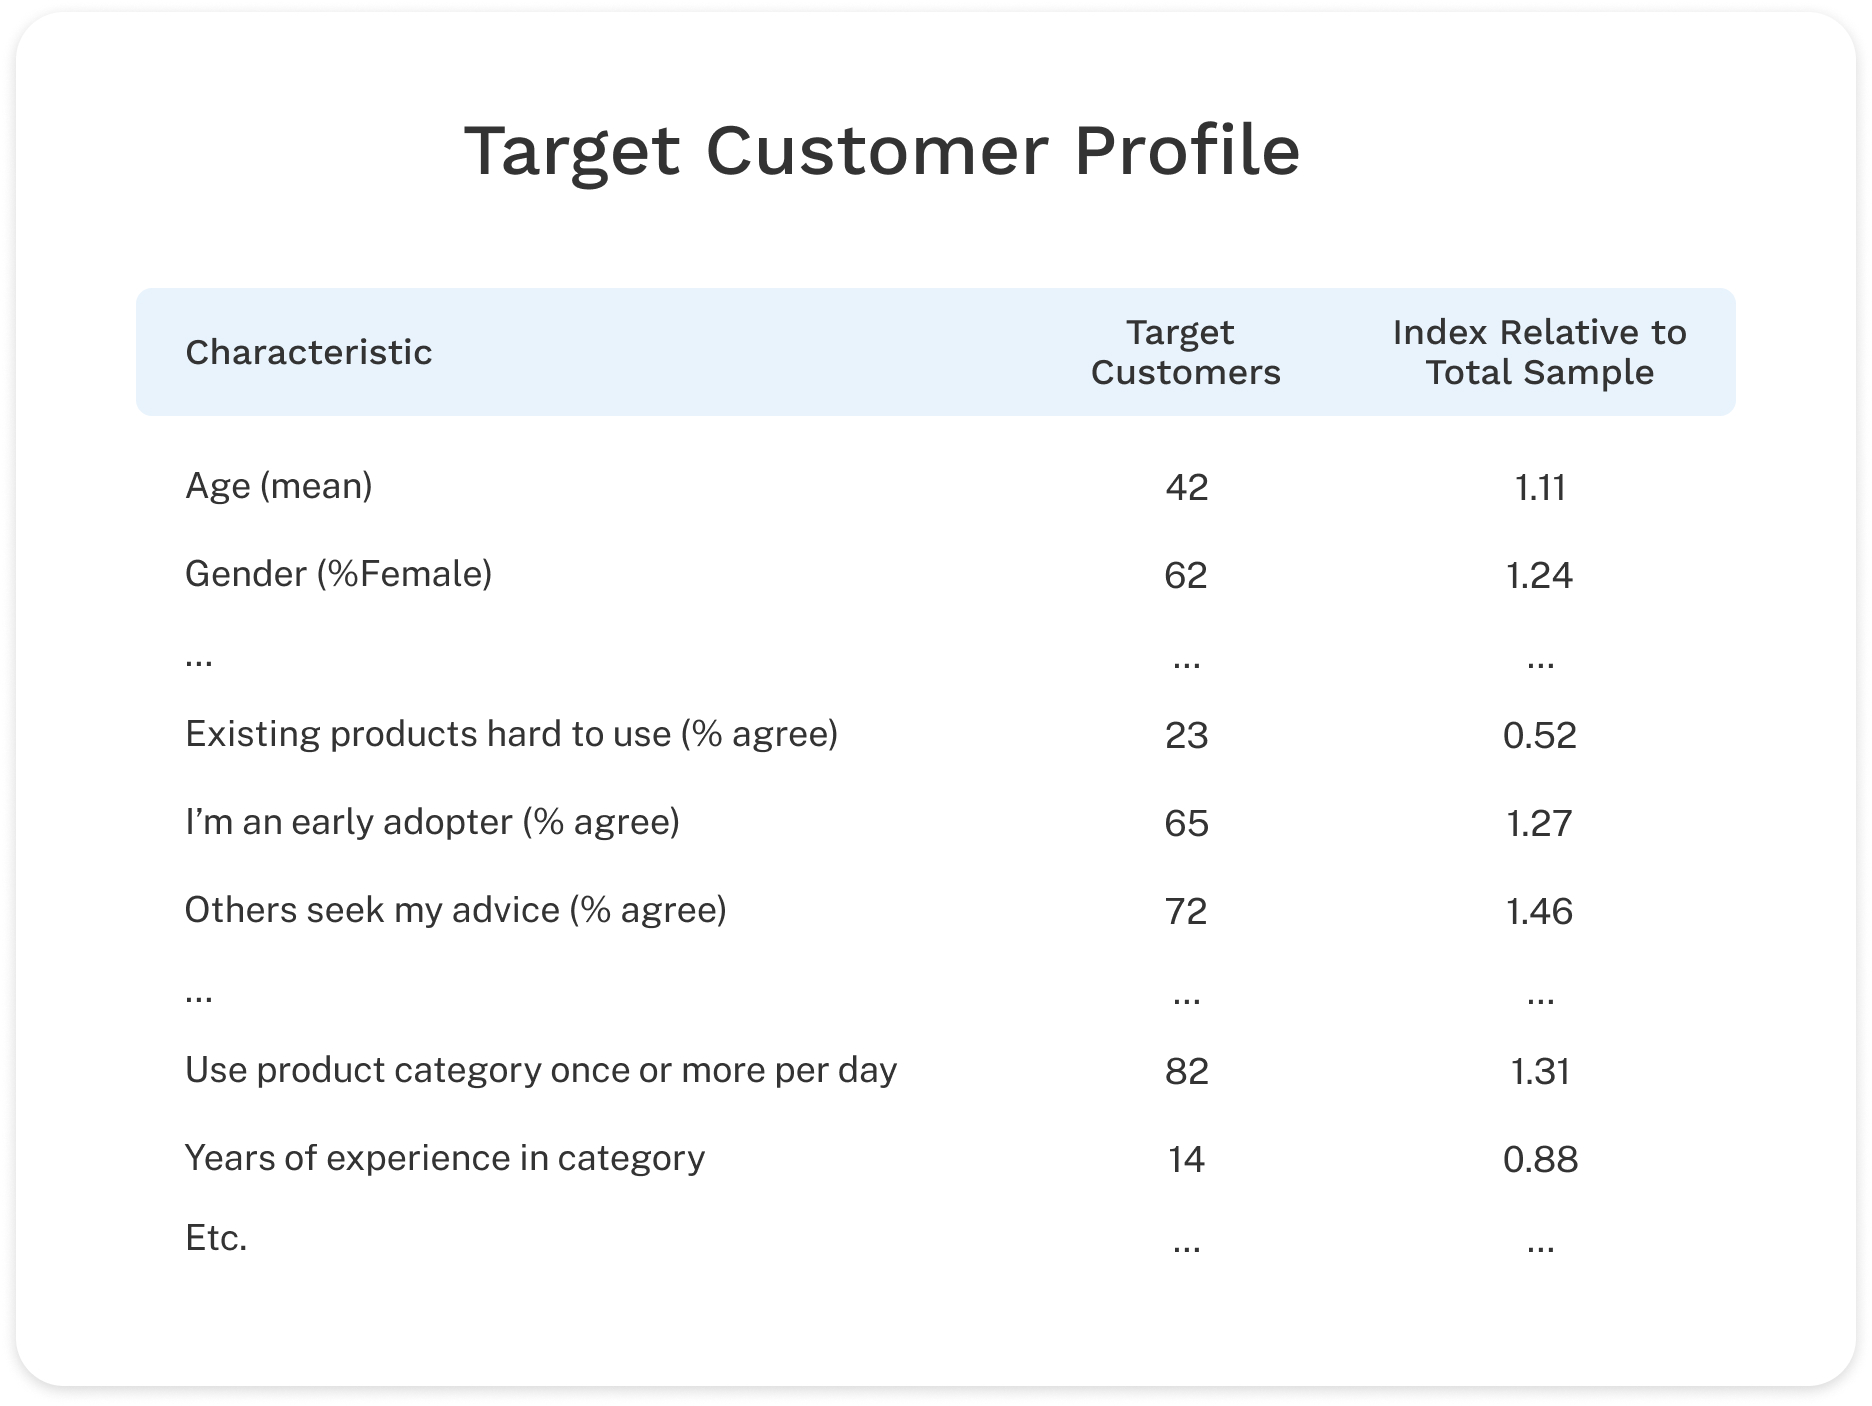 Descriptive table illustrating what a Target Customer Profile looks like.